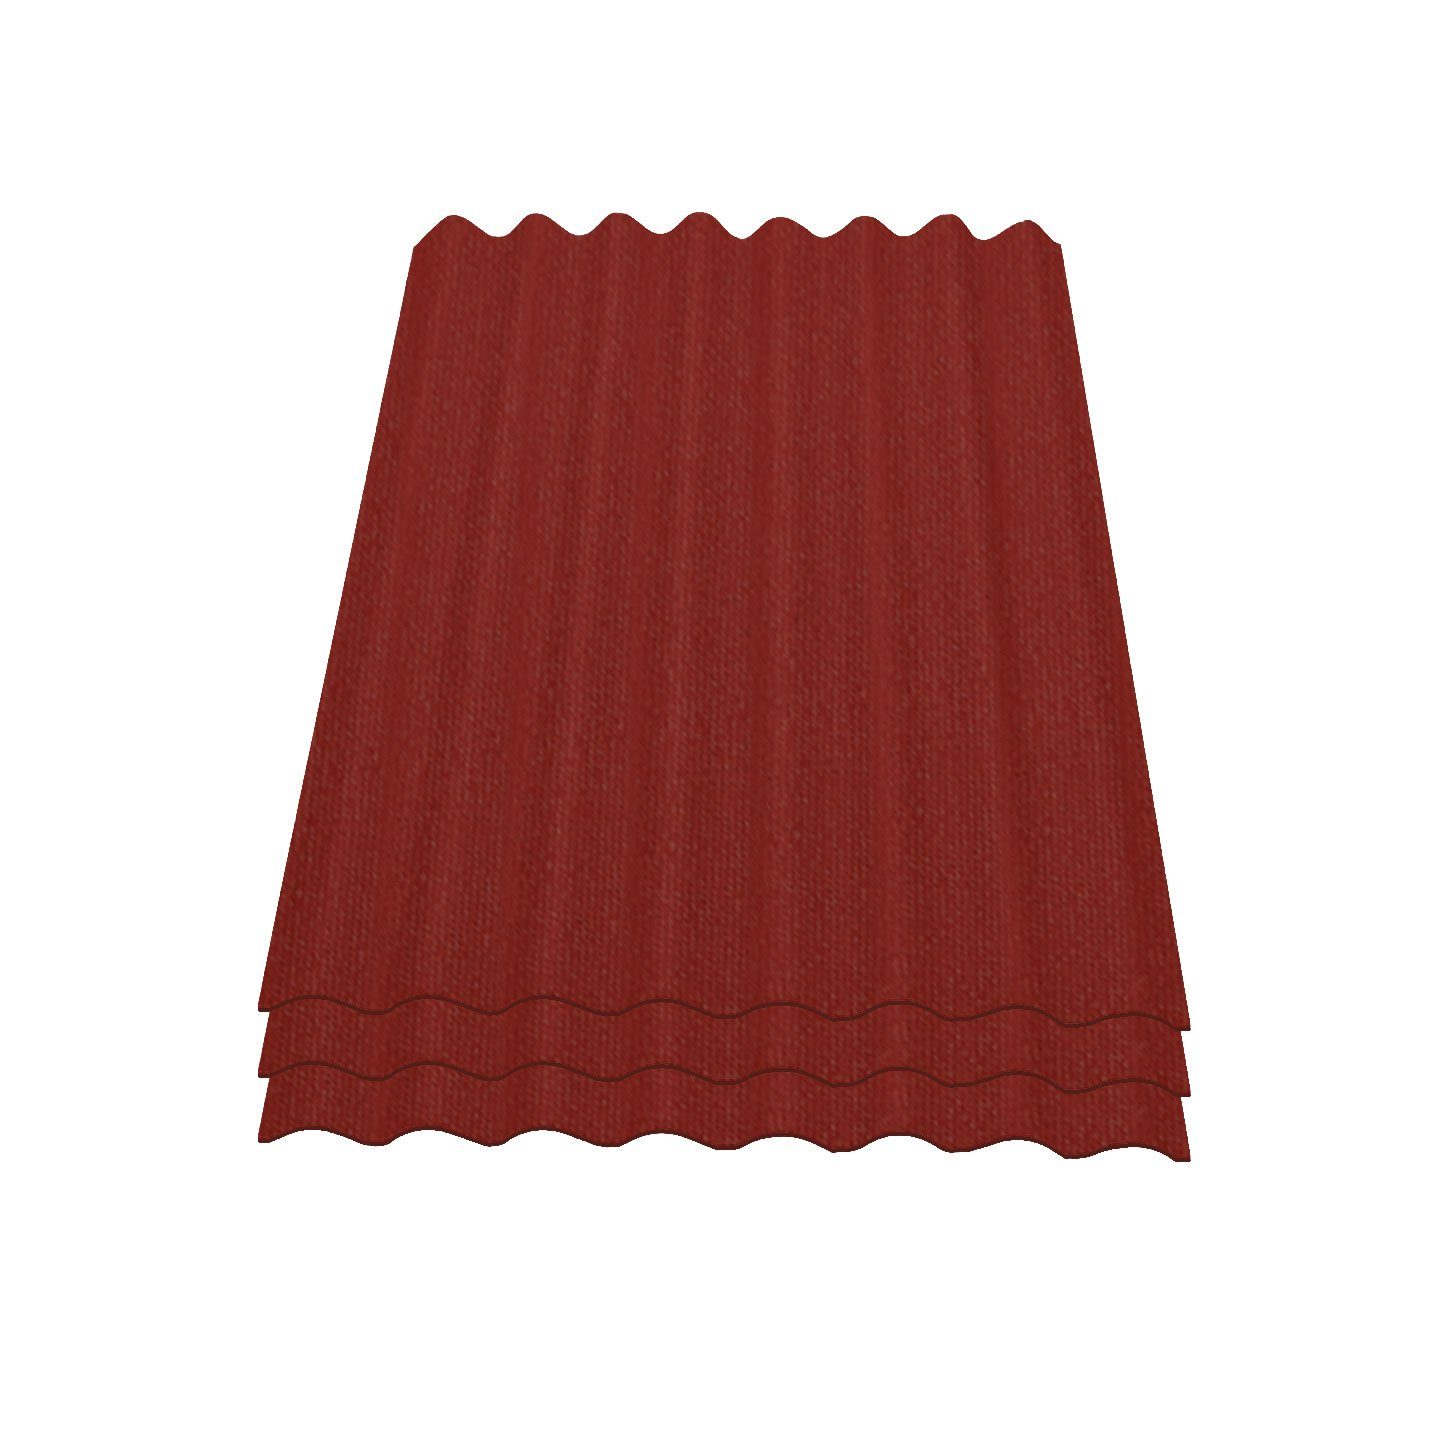 Onduline Dachpappe Onduline Easyline Dachplatte Wandplatte Bitumenwellplatten Wellplatte 3x0,76m² - rot, wellig, 2.28 m² pro Paket, (3-St)